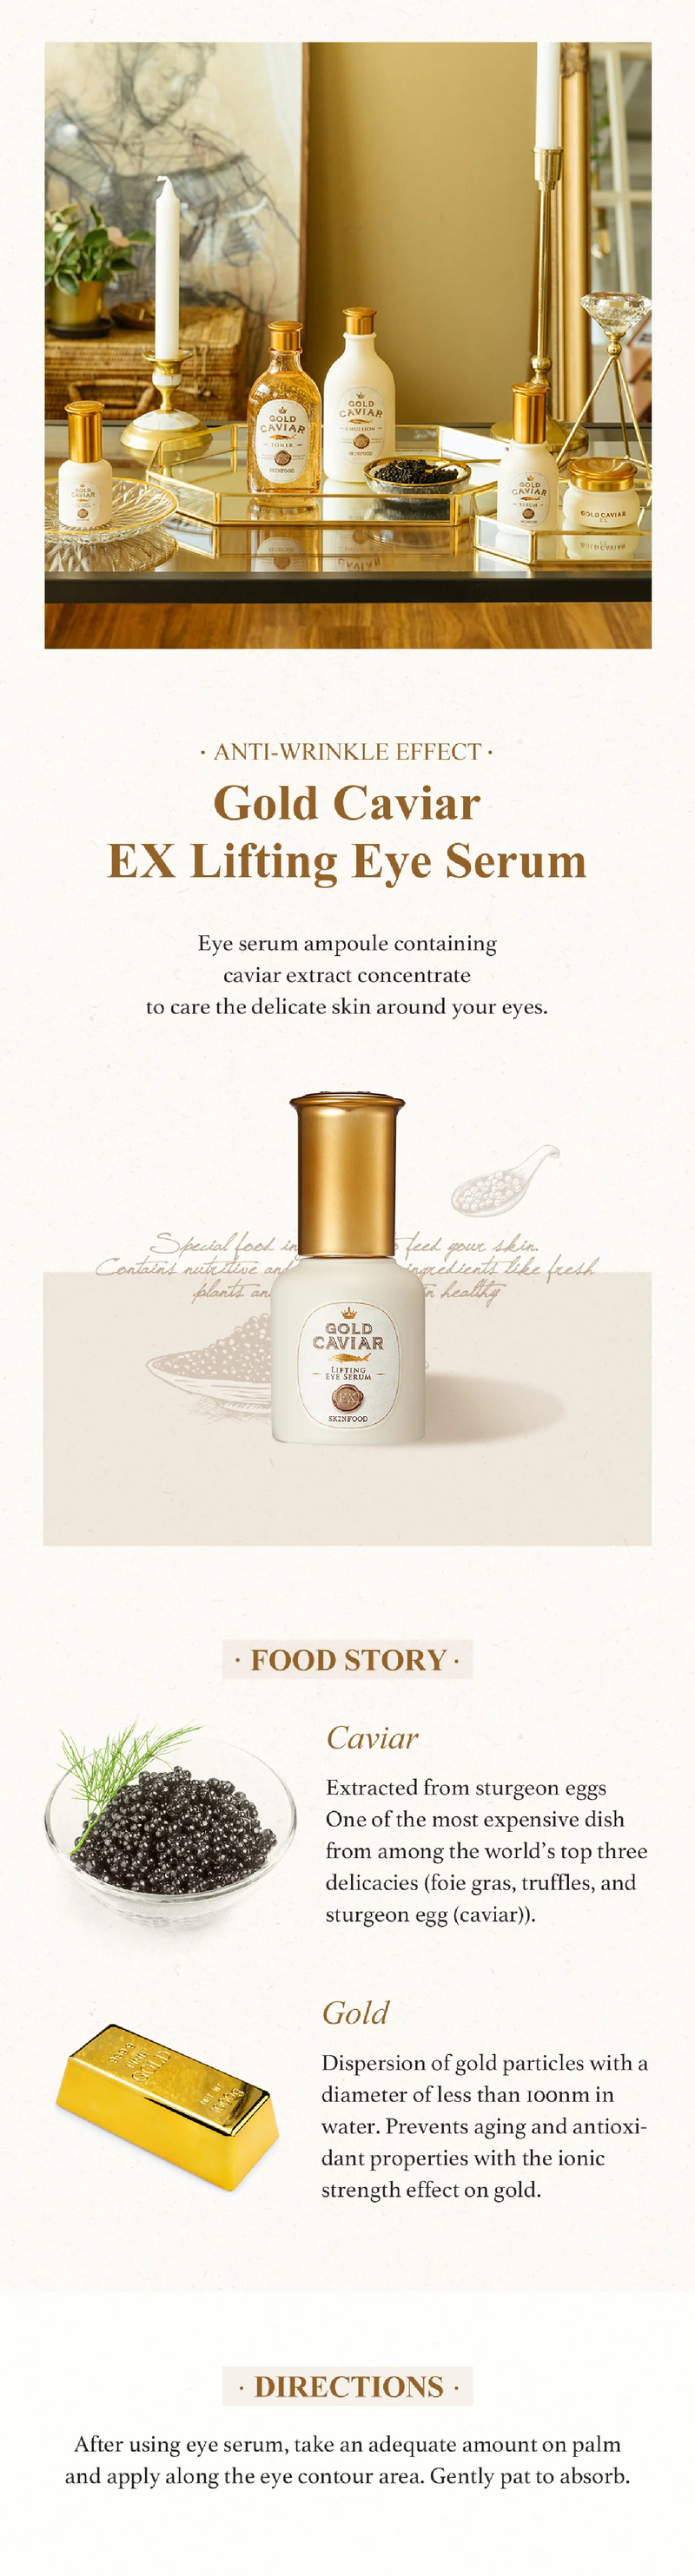 Skinfood Gold Caviar EX soro lifting para olhos